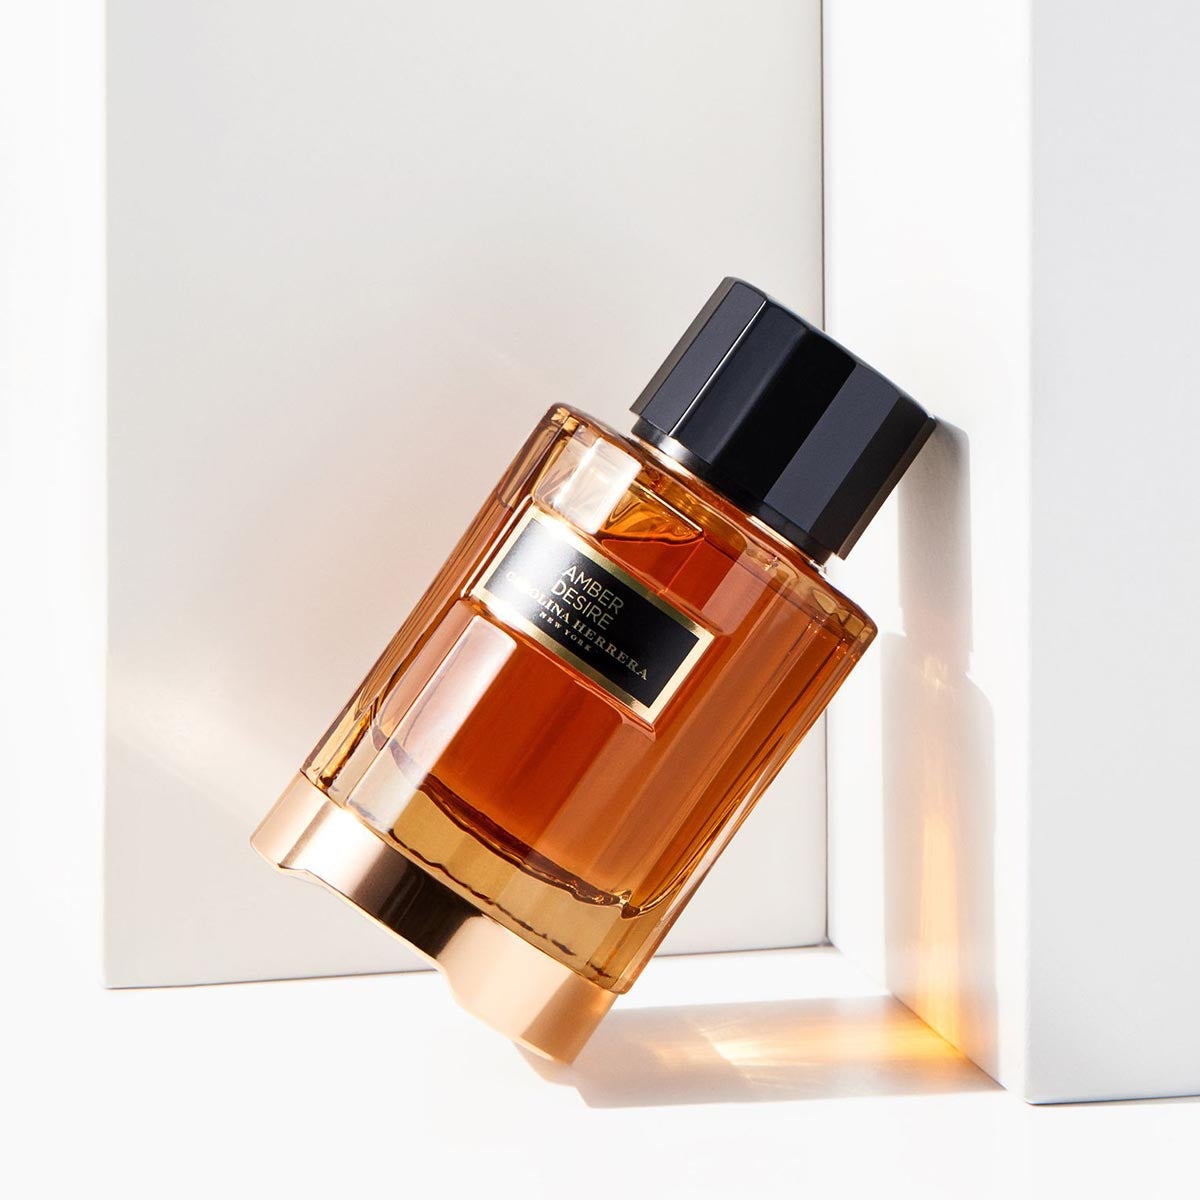 Carolina Herrera Confidential Collection Gift Set - My Perfume Shop Australia